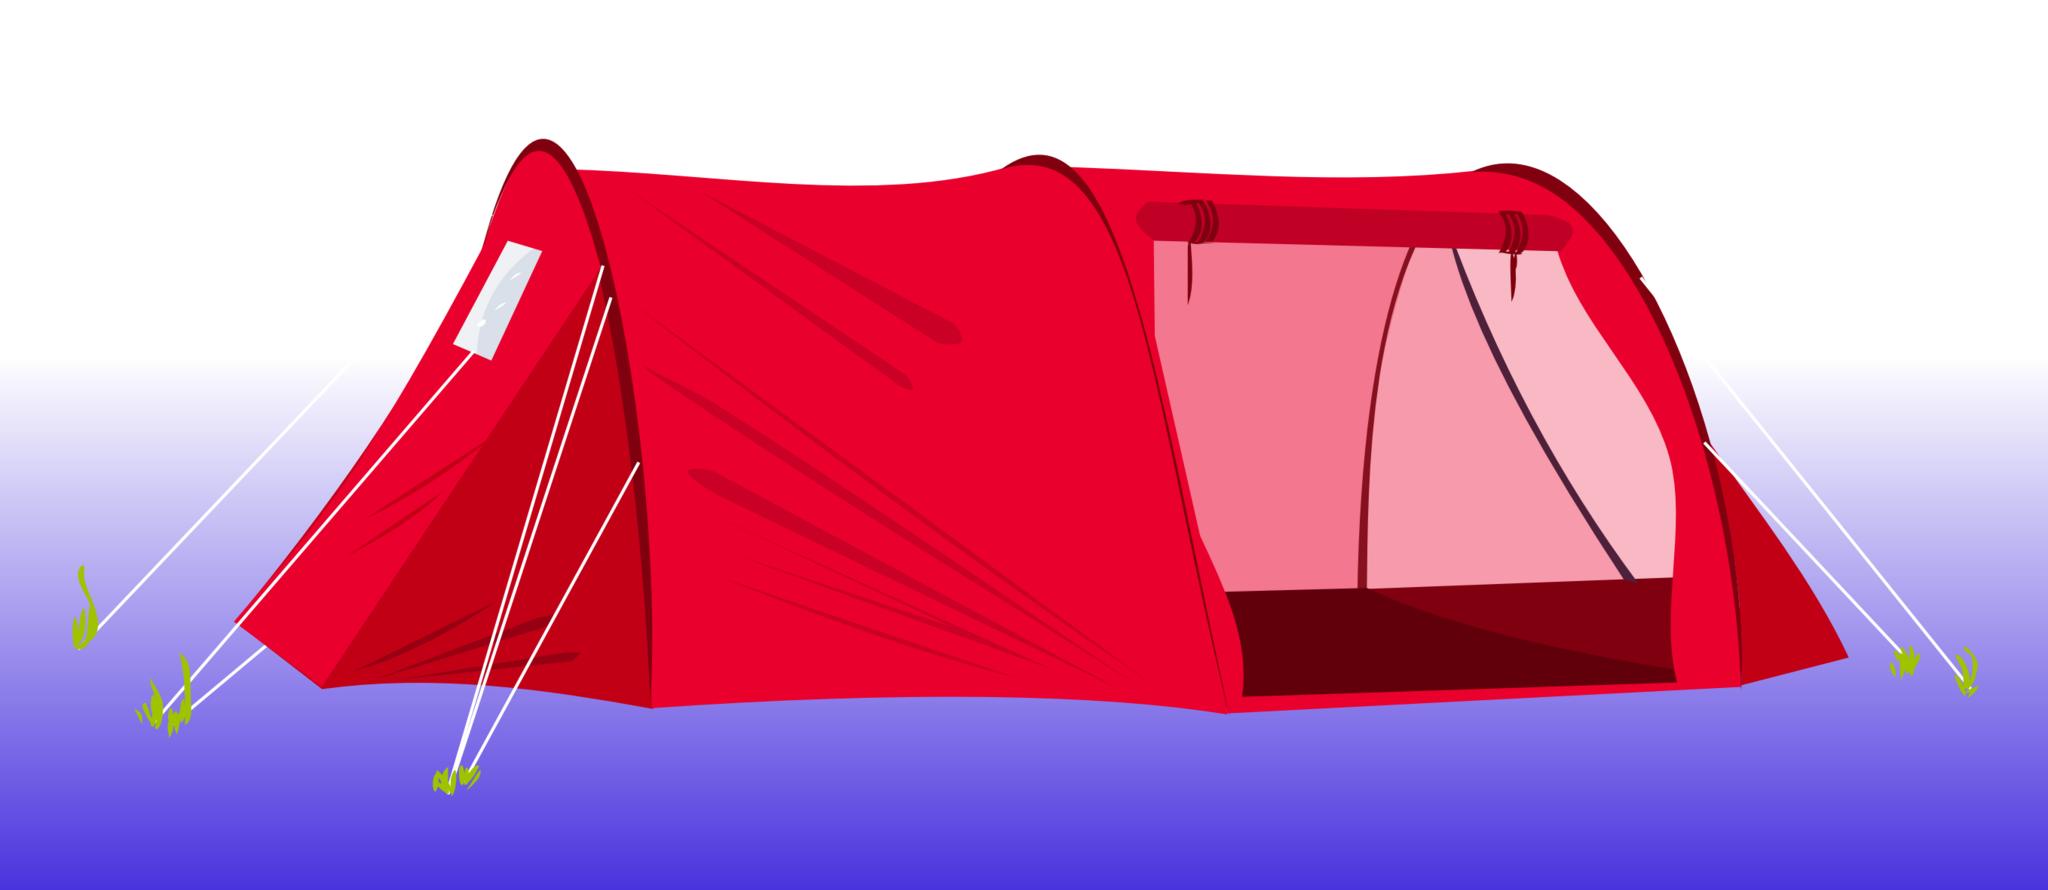 Палатка красная рисованная